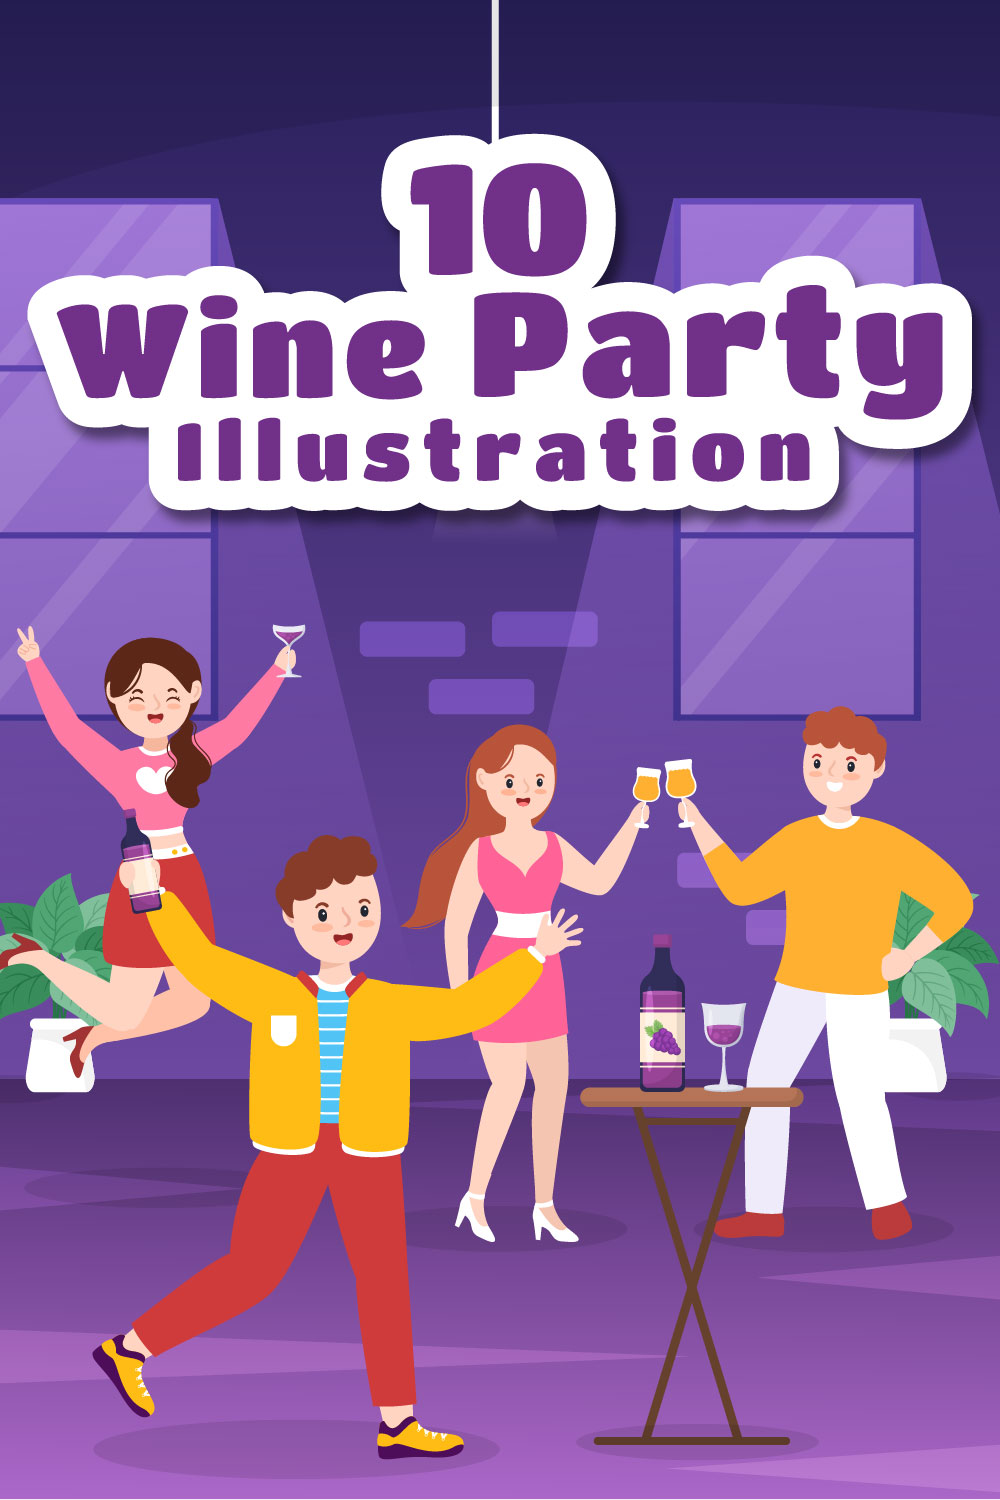 10 Wine Party Flat Illustration pinterest image.